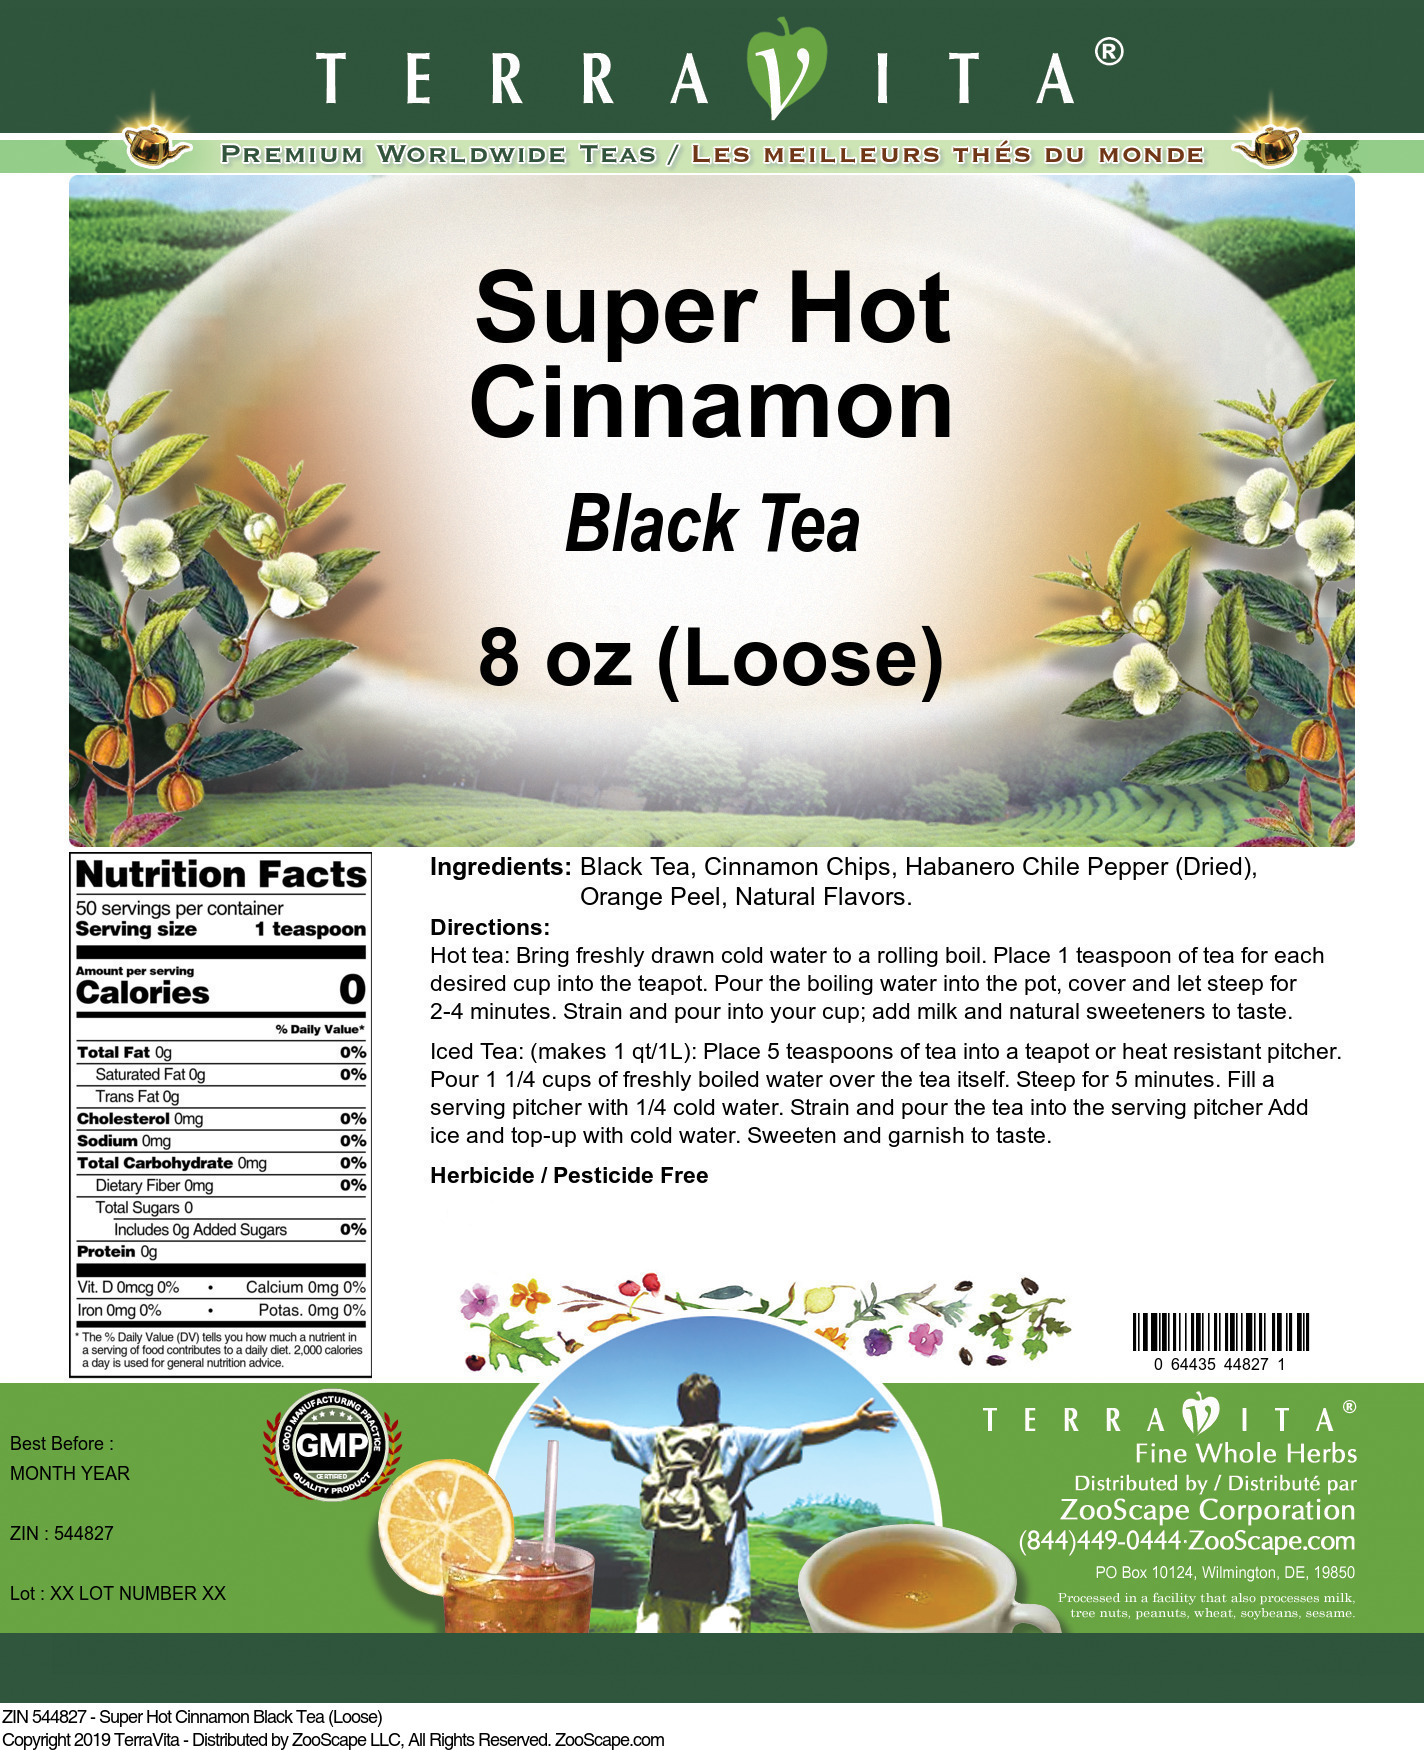 Super Hot Cinnamon Black Tea (Loose) - Label